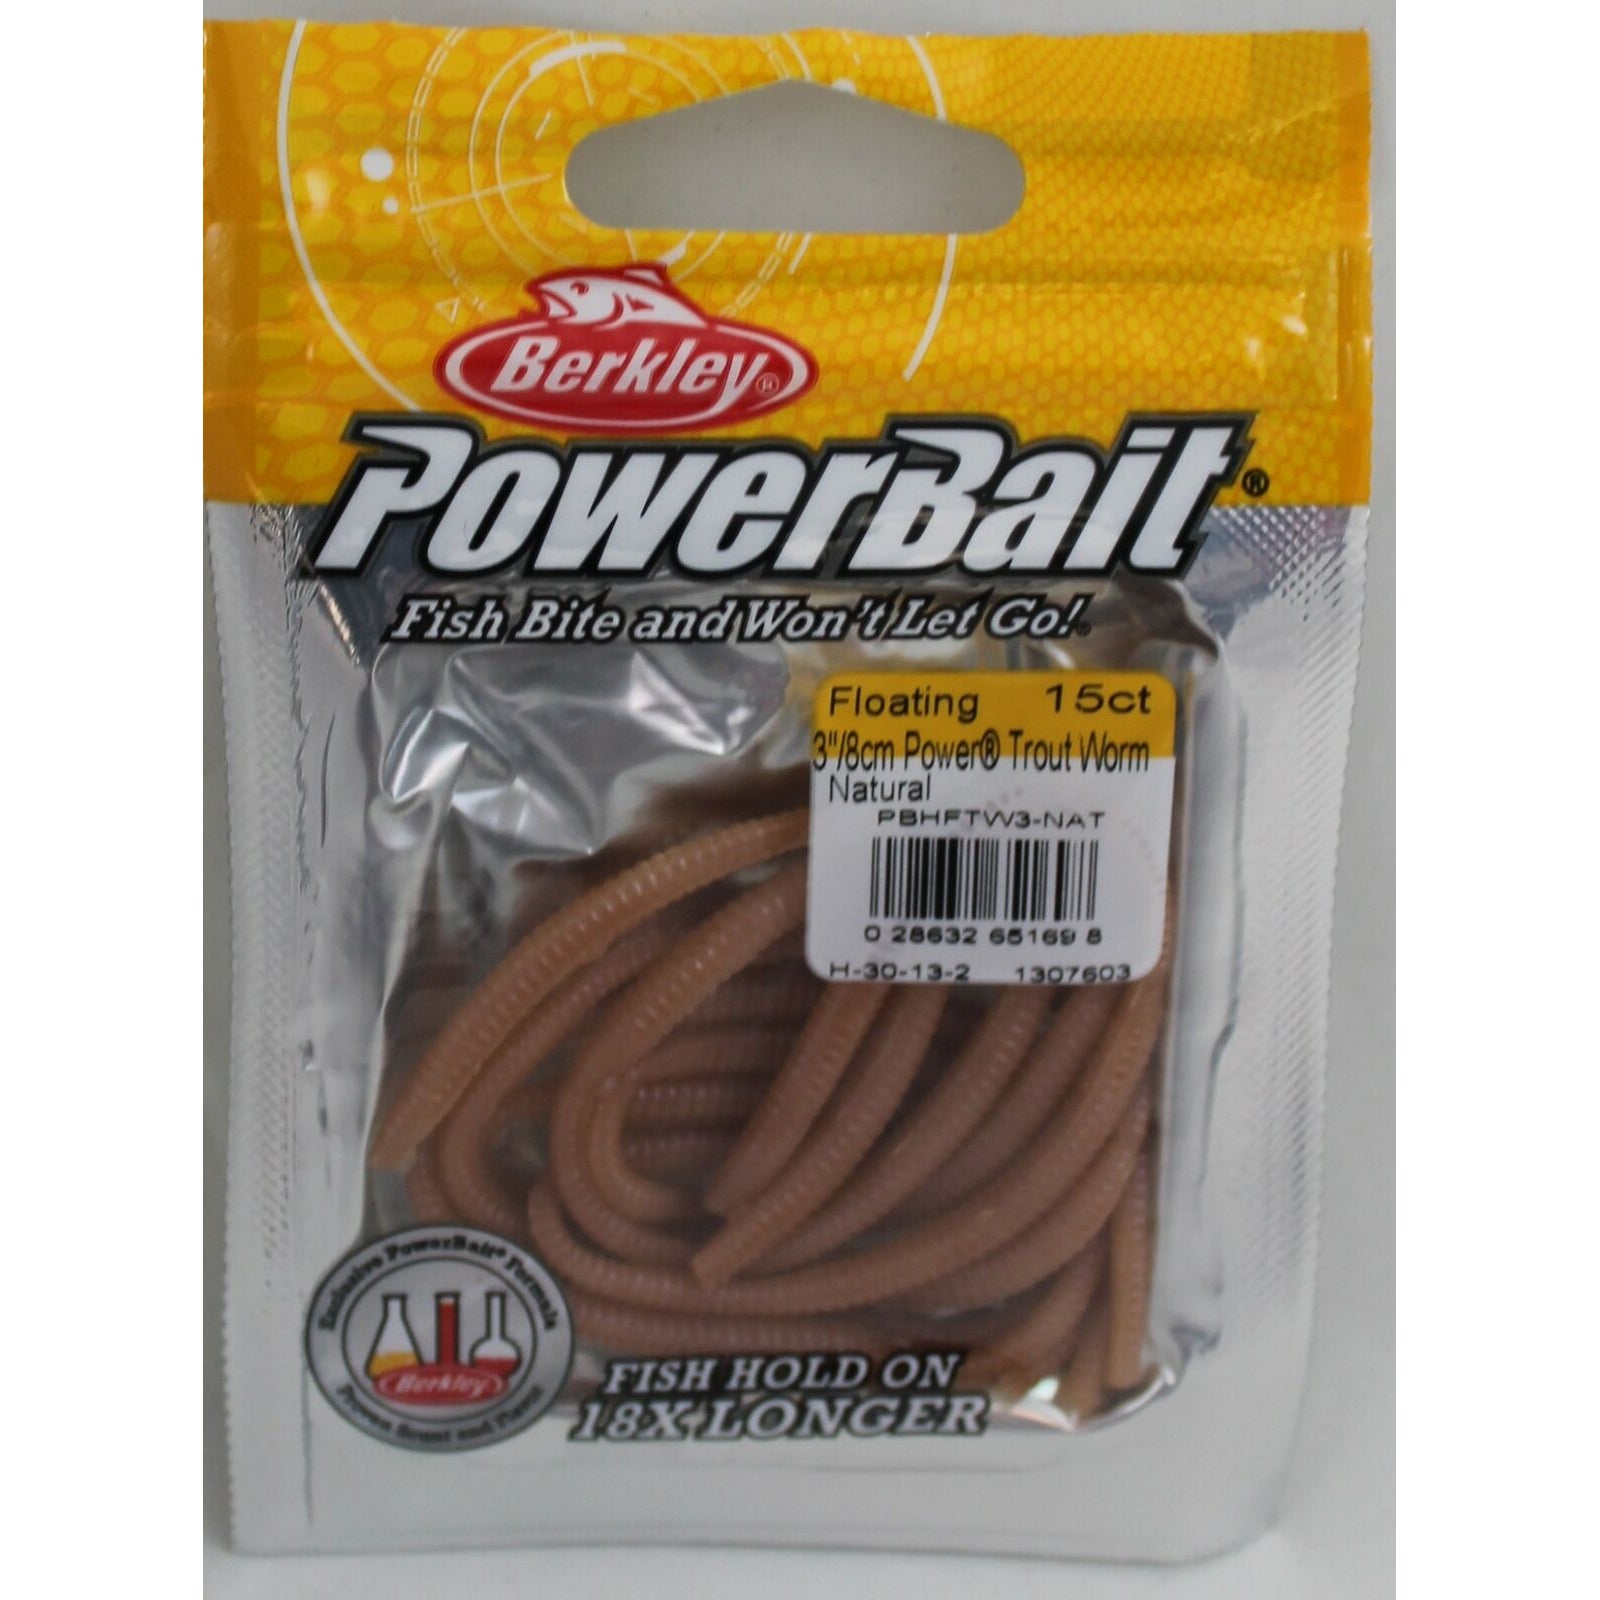 2 - Berkley Powerbait Floating Trout Worm - 15/Ct - 3- Orange Peel & White